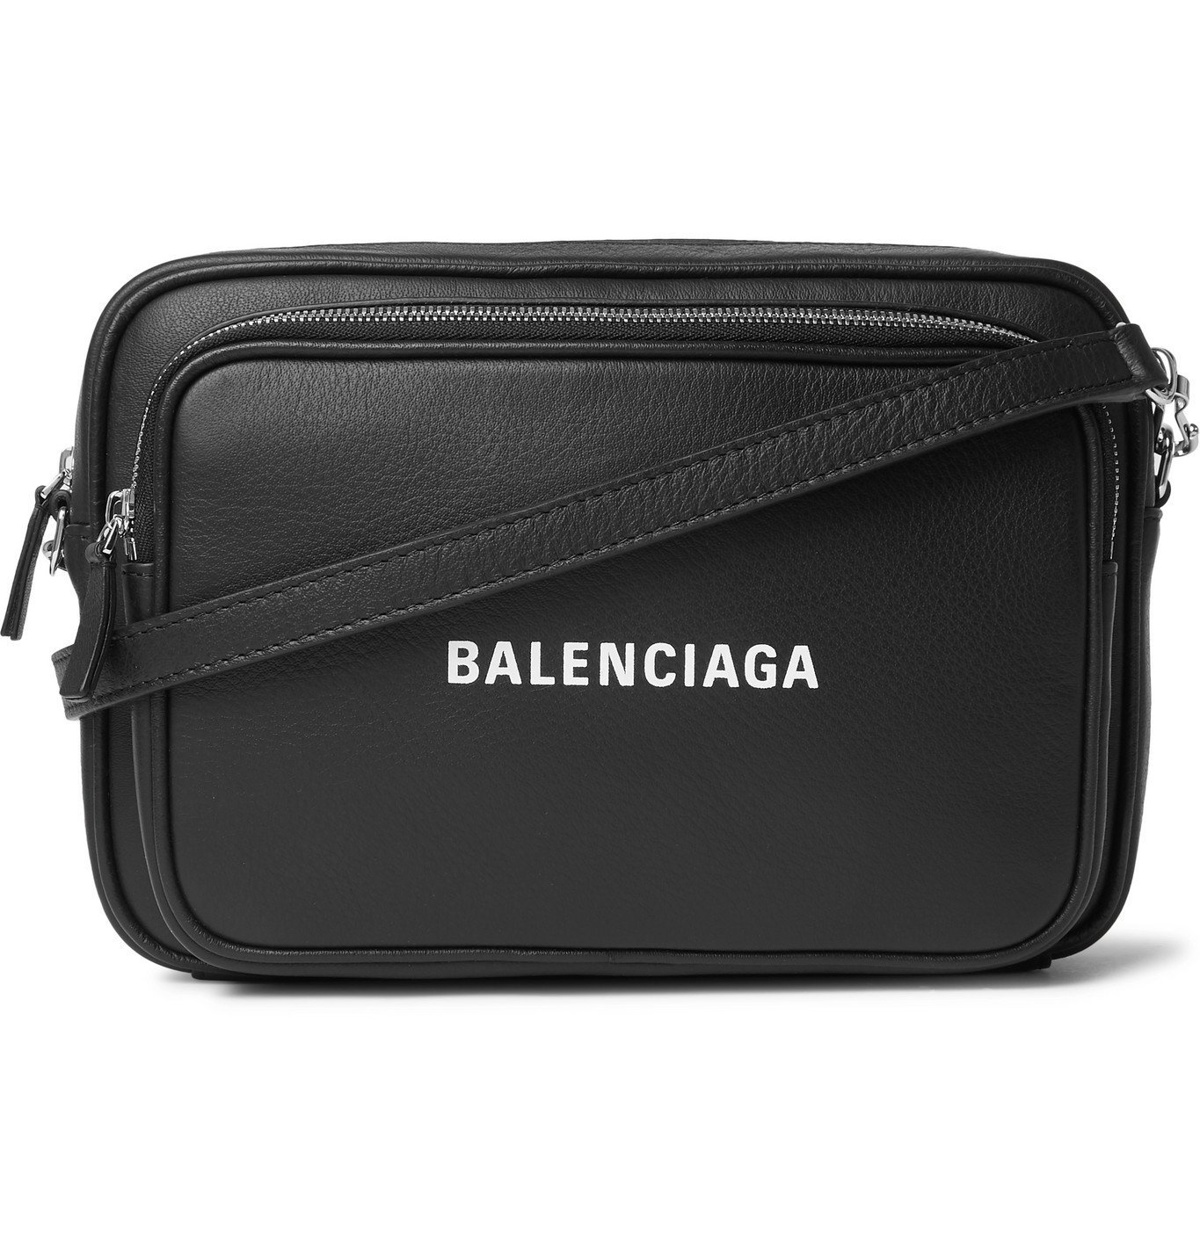 Balenciaga - Leather Messenger Bag - Black